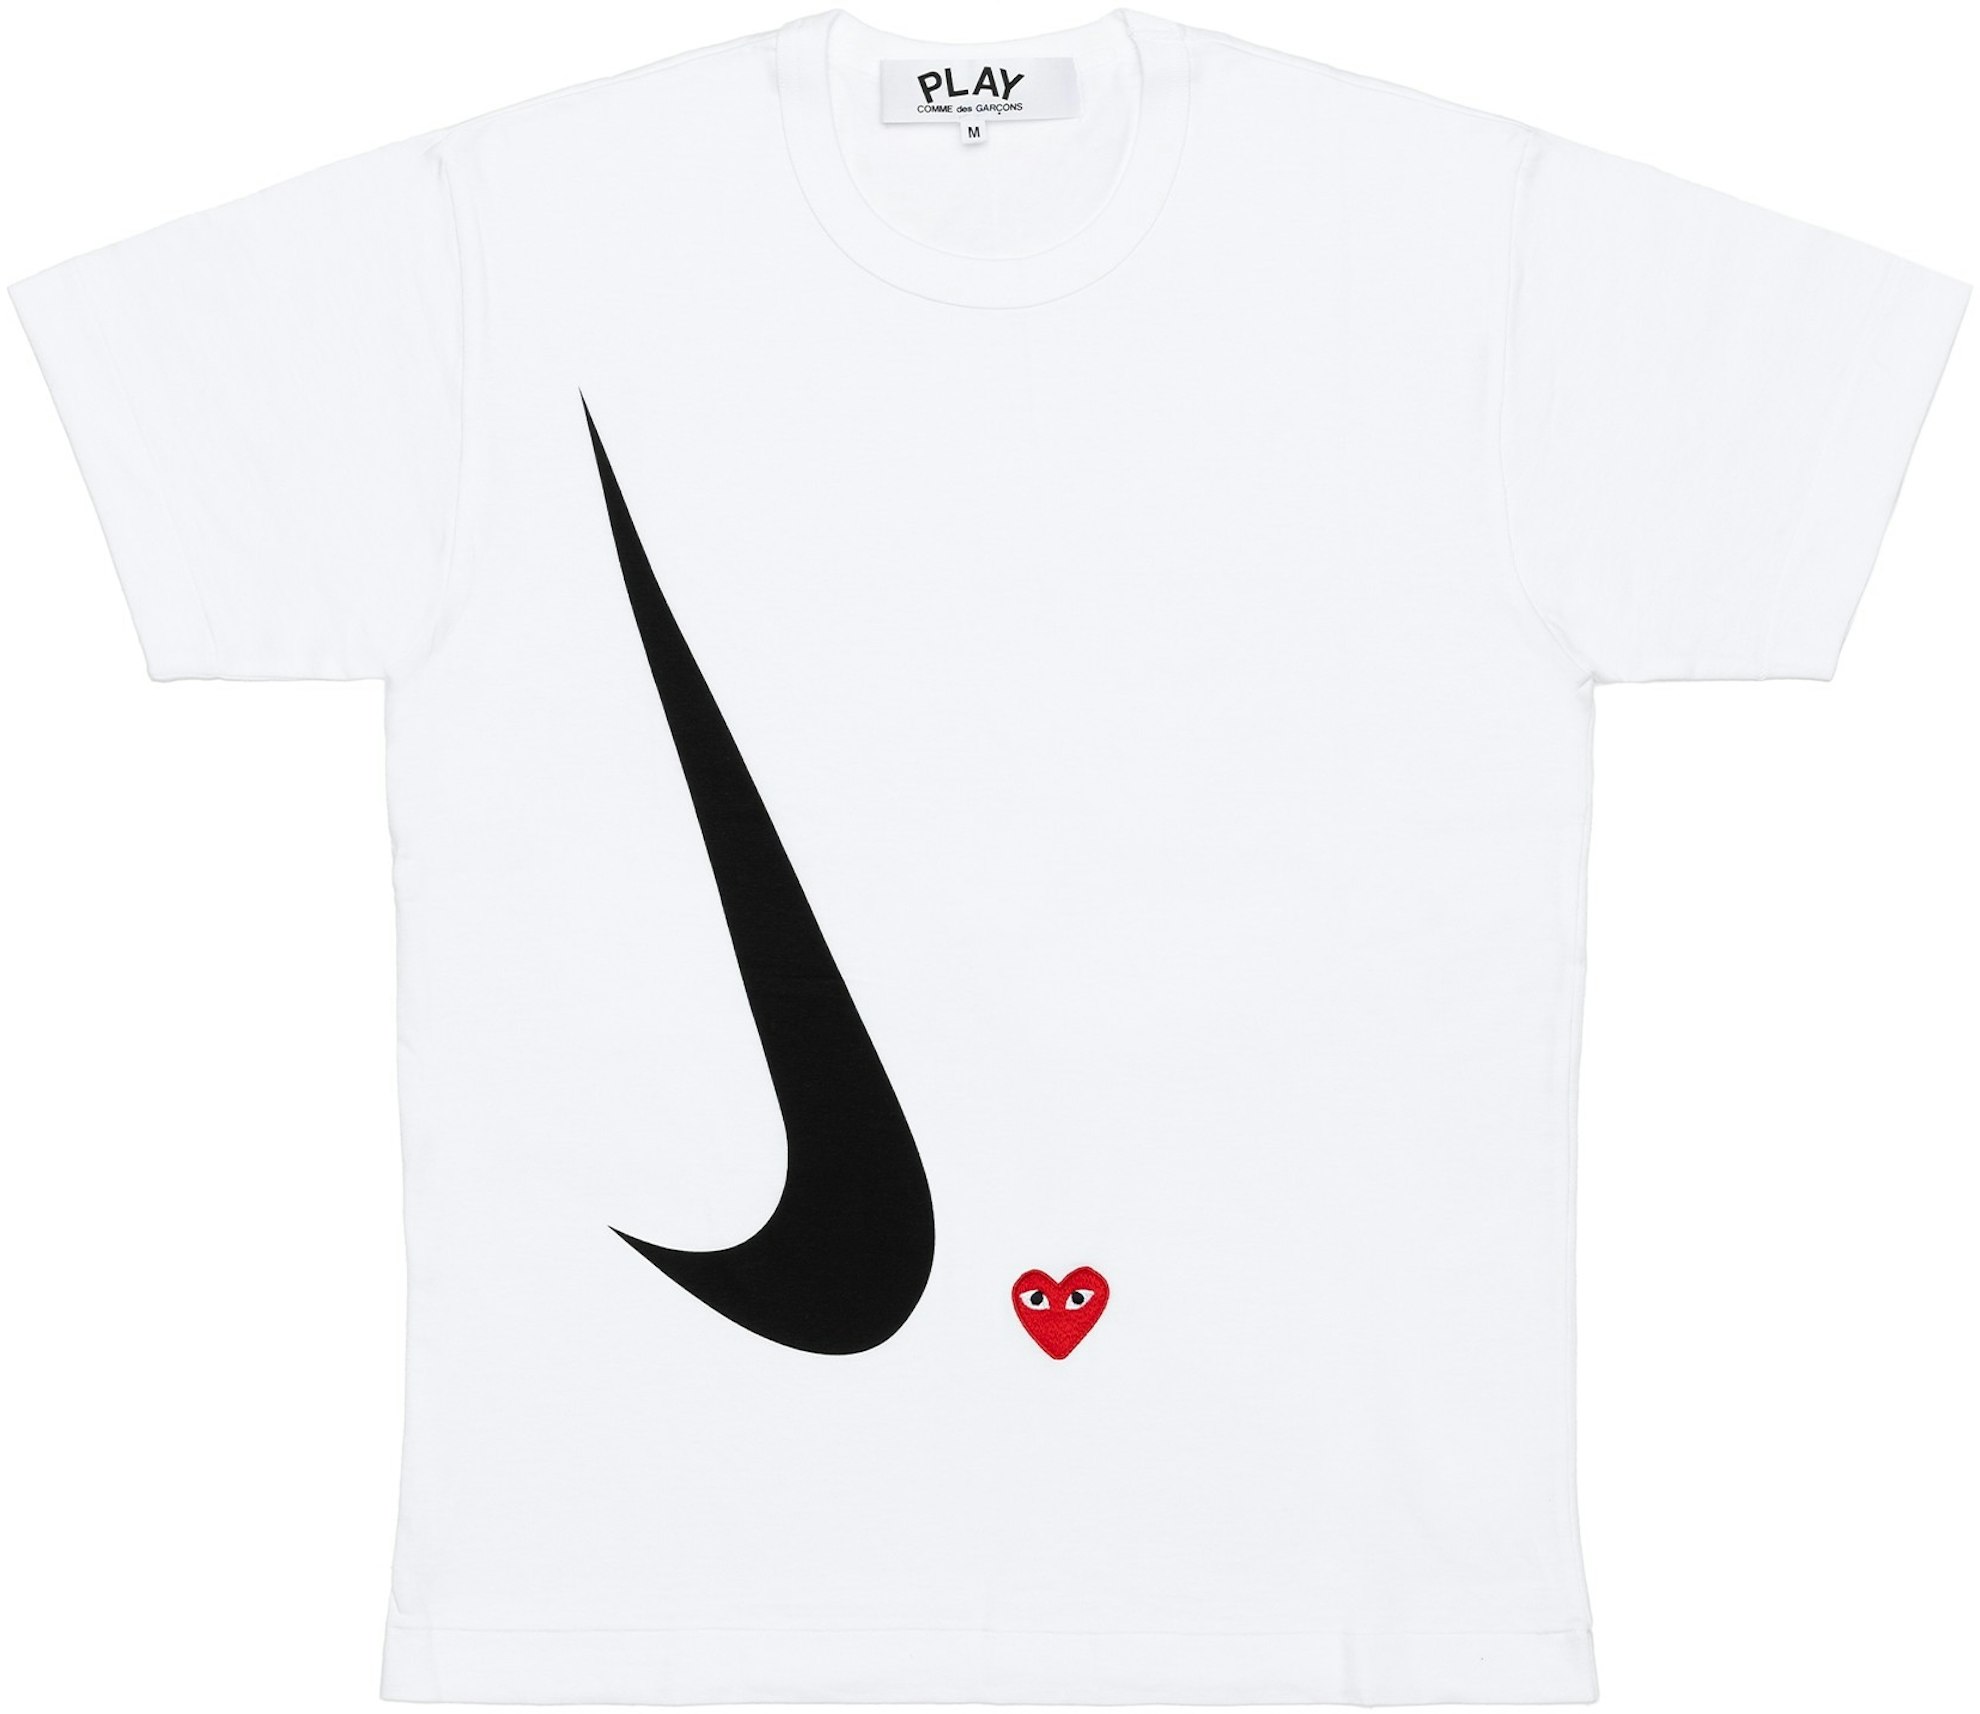 Artesano Lo siento Tanga estrecha CDG x Nike T-shirt White - SS21 Men's - US